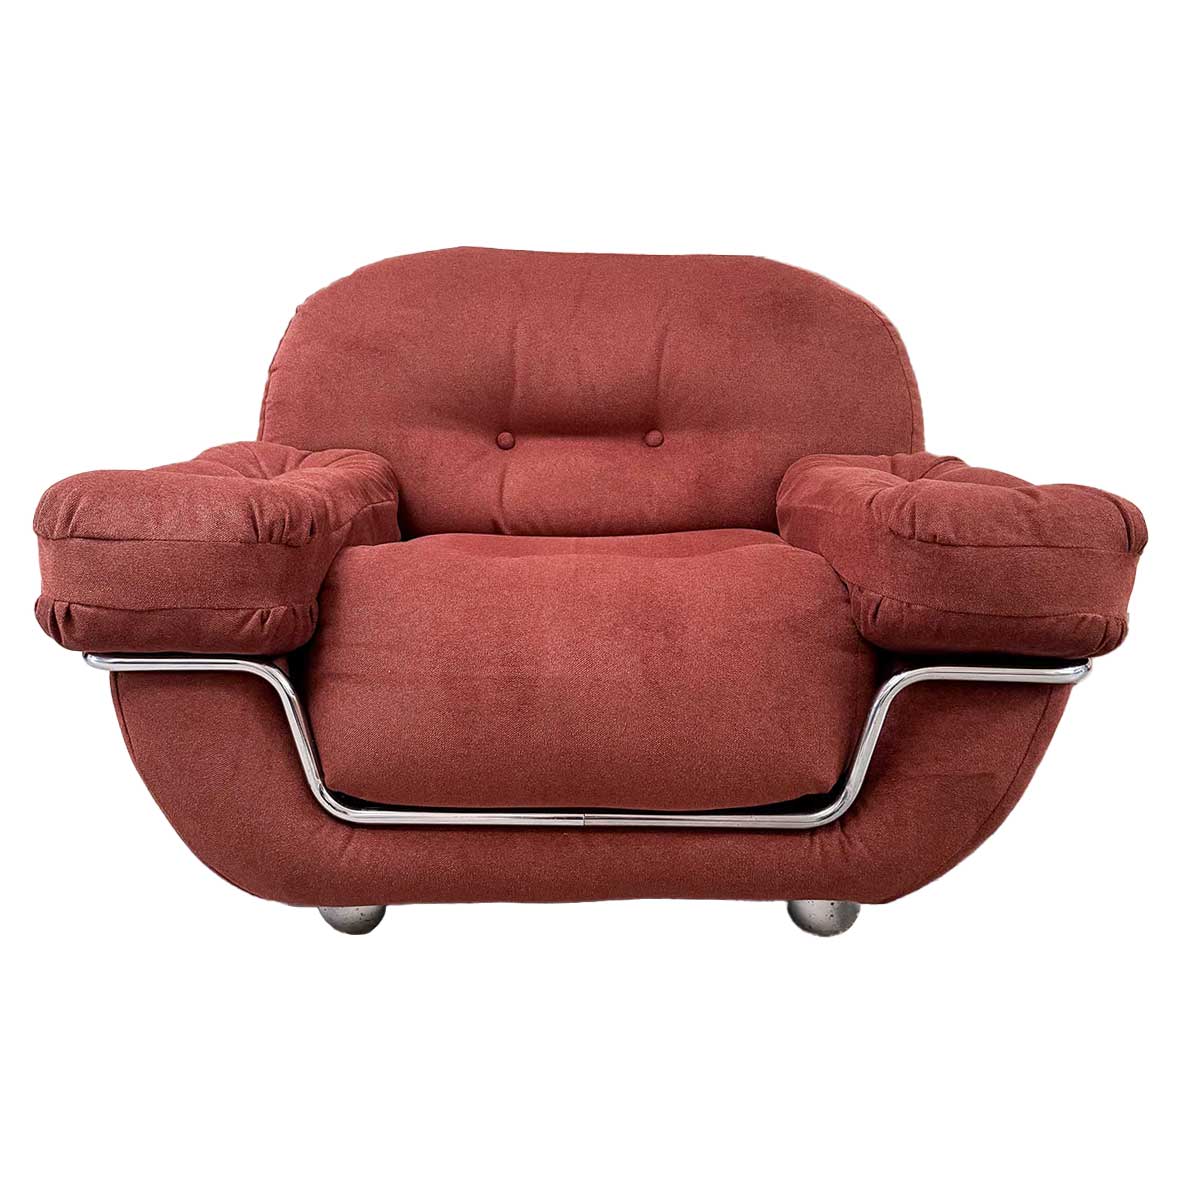 80's Chubby Lounge Chair, Velvet Date